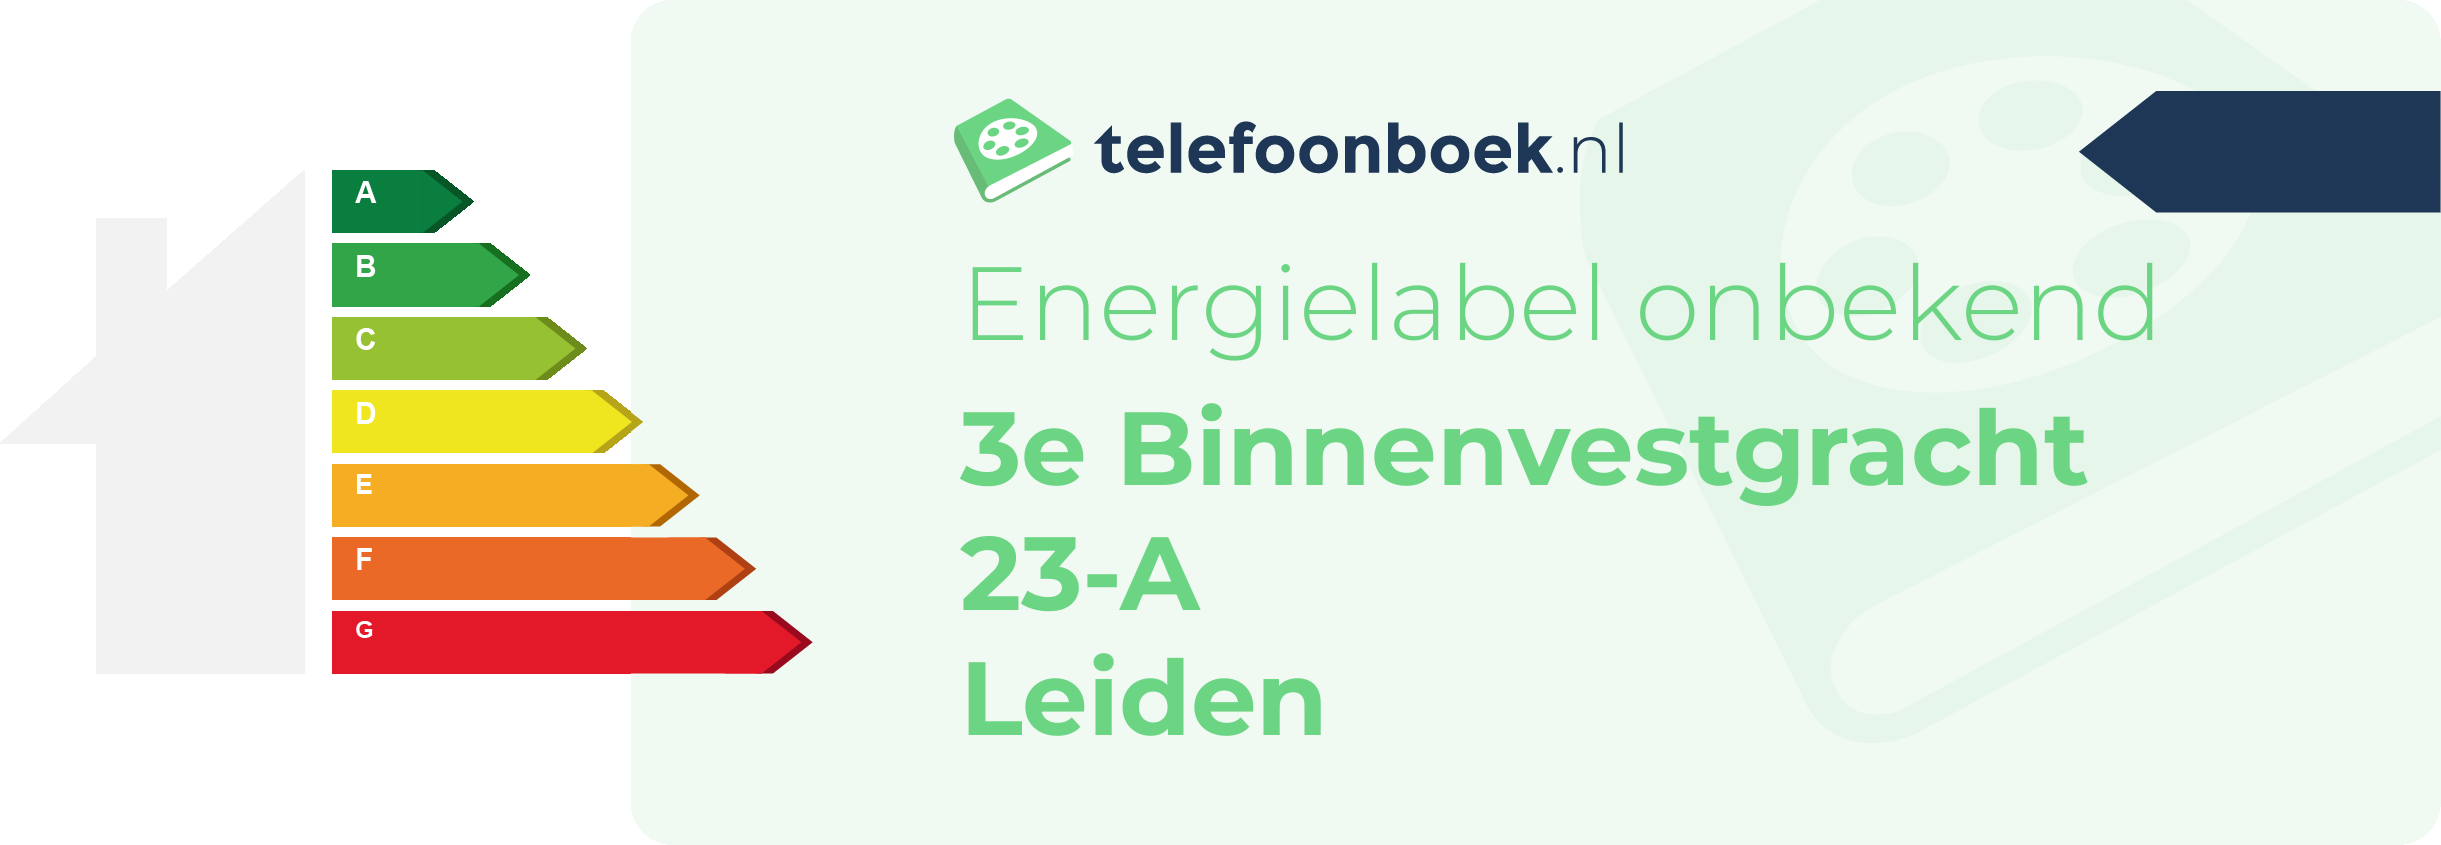 Energielabel 3e Binnenvestgracht 23-A Leiden